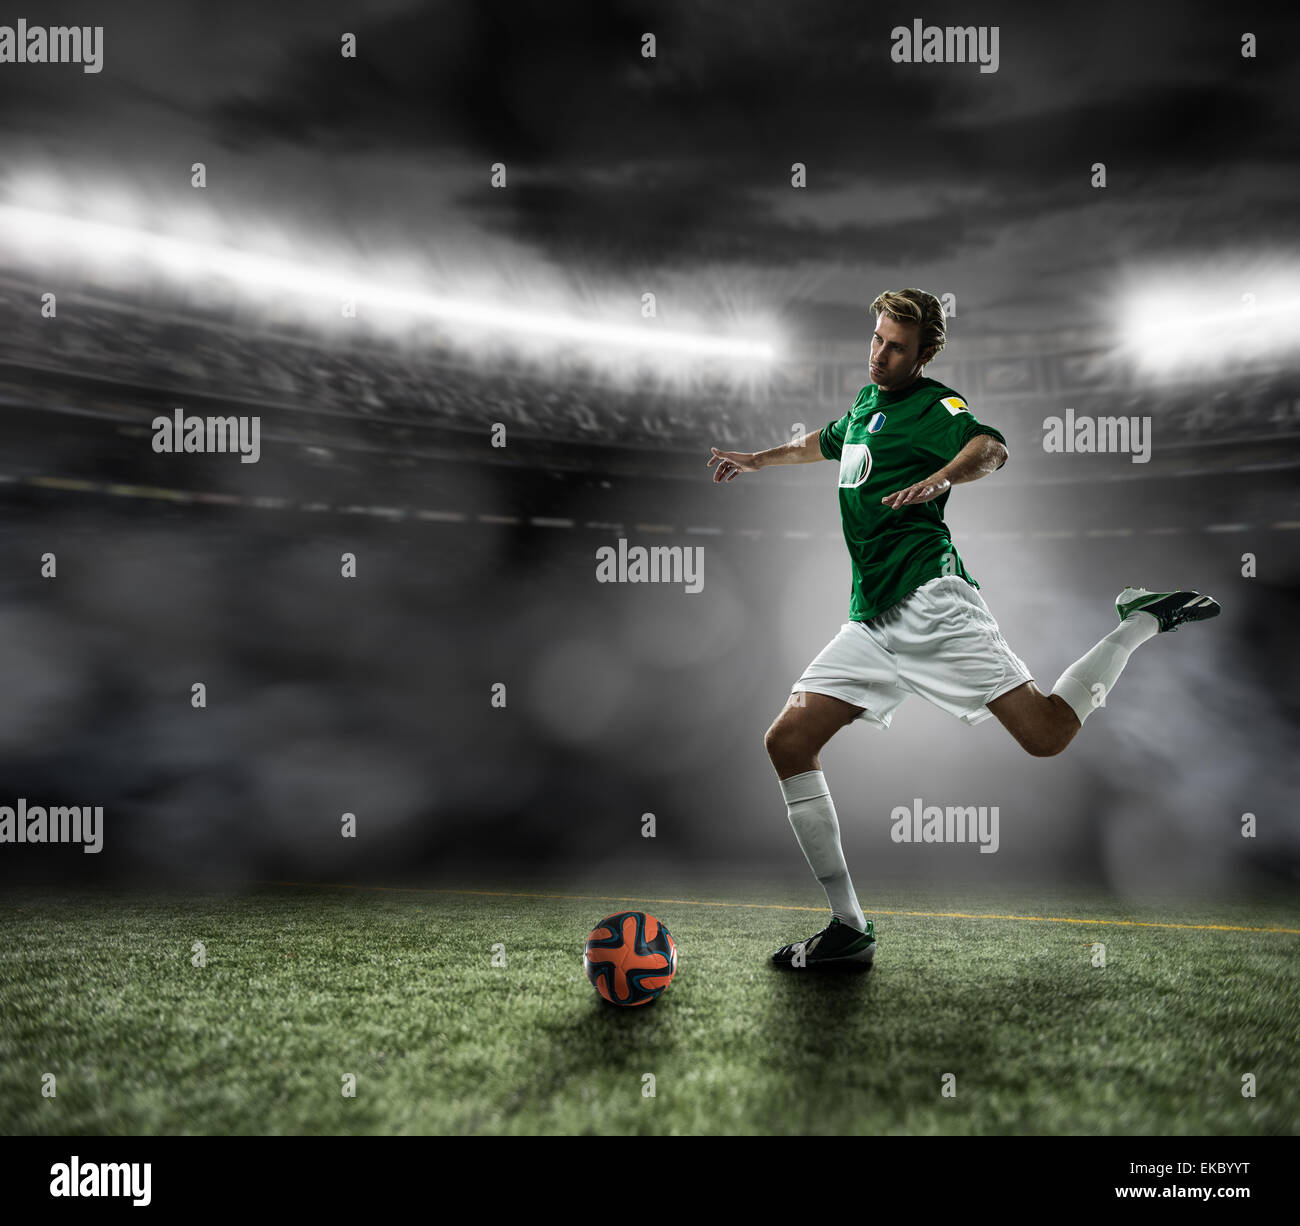 Kicking football ball Banque D'Images